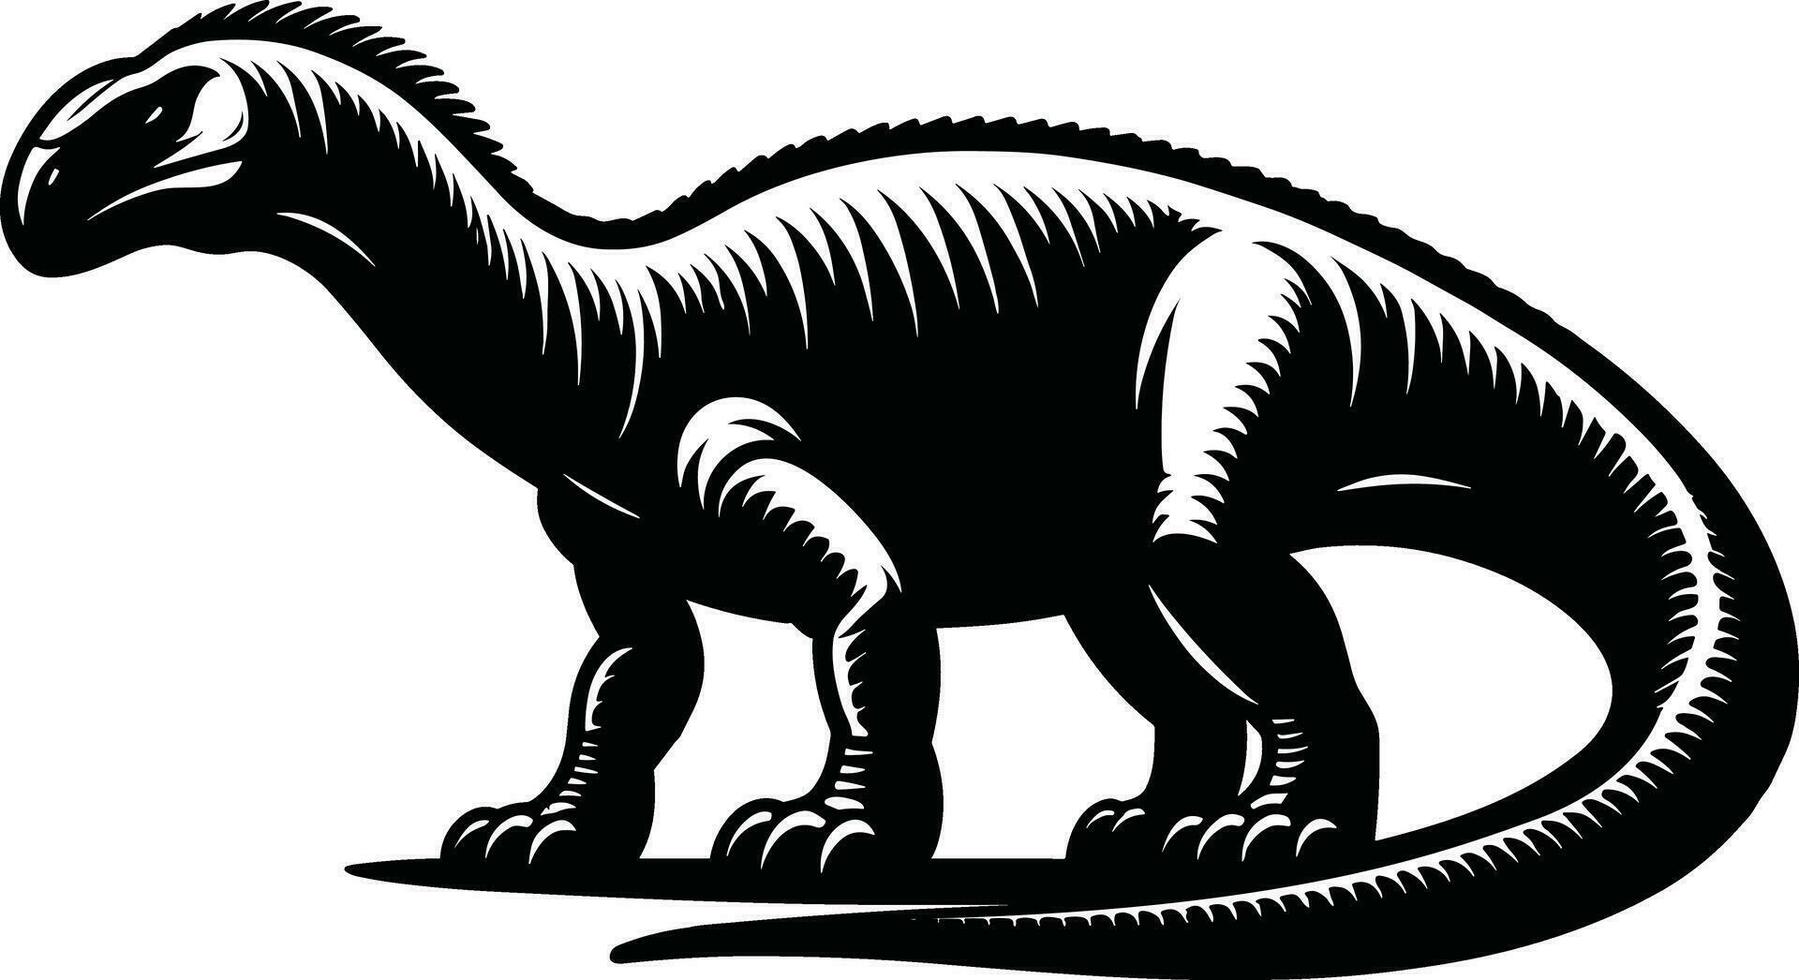 Iguanodon Dinosaur illustration Free vector